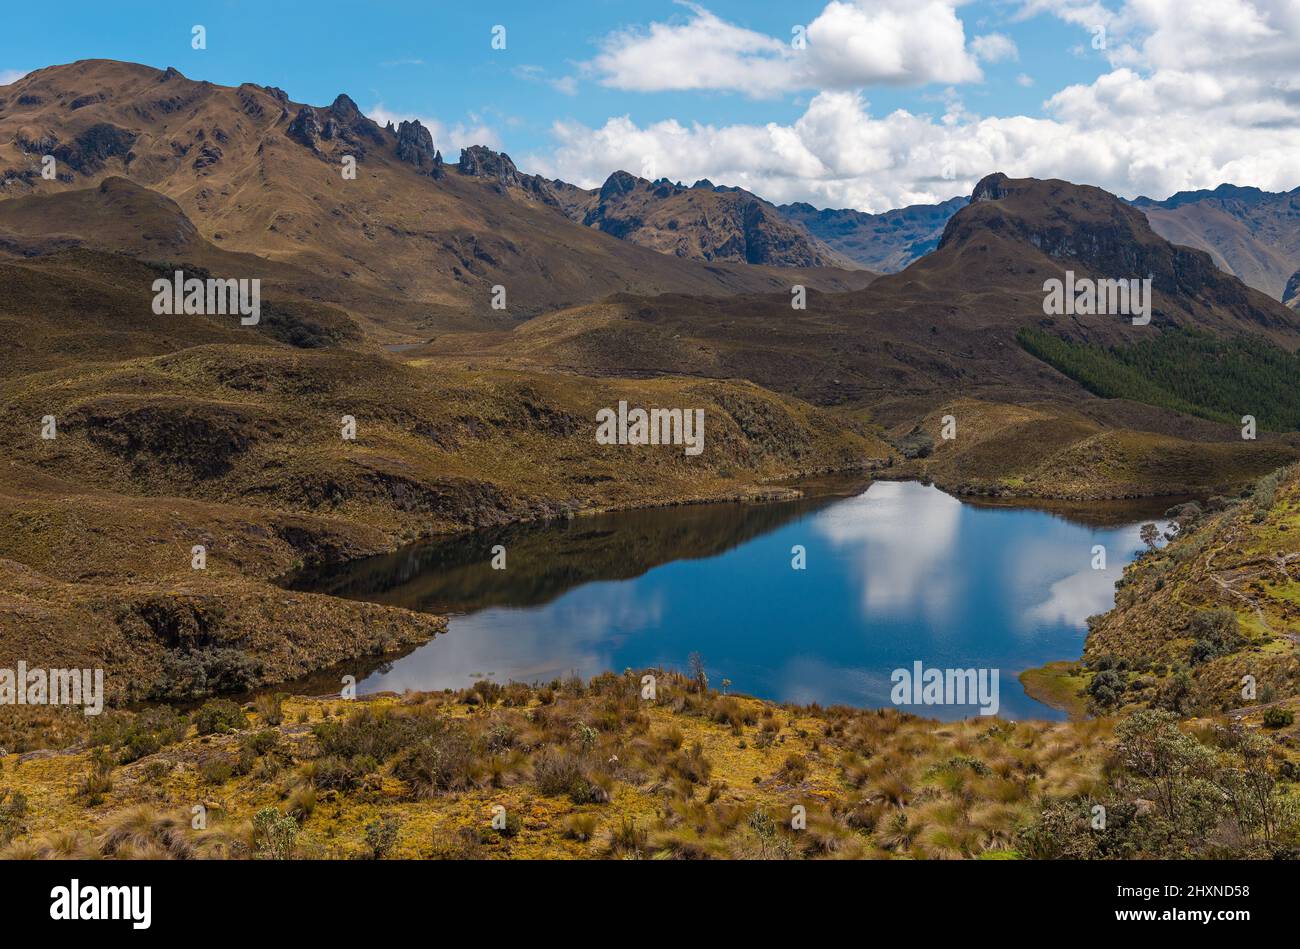 Lagoon and Andes mountains landscape, Cajas national park, Cuenca, Ecuador. Stock Photo